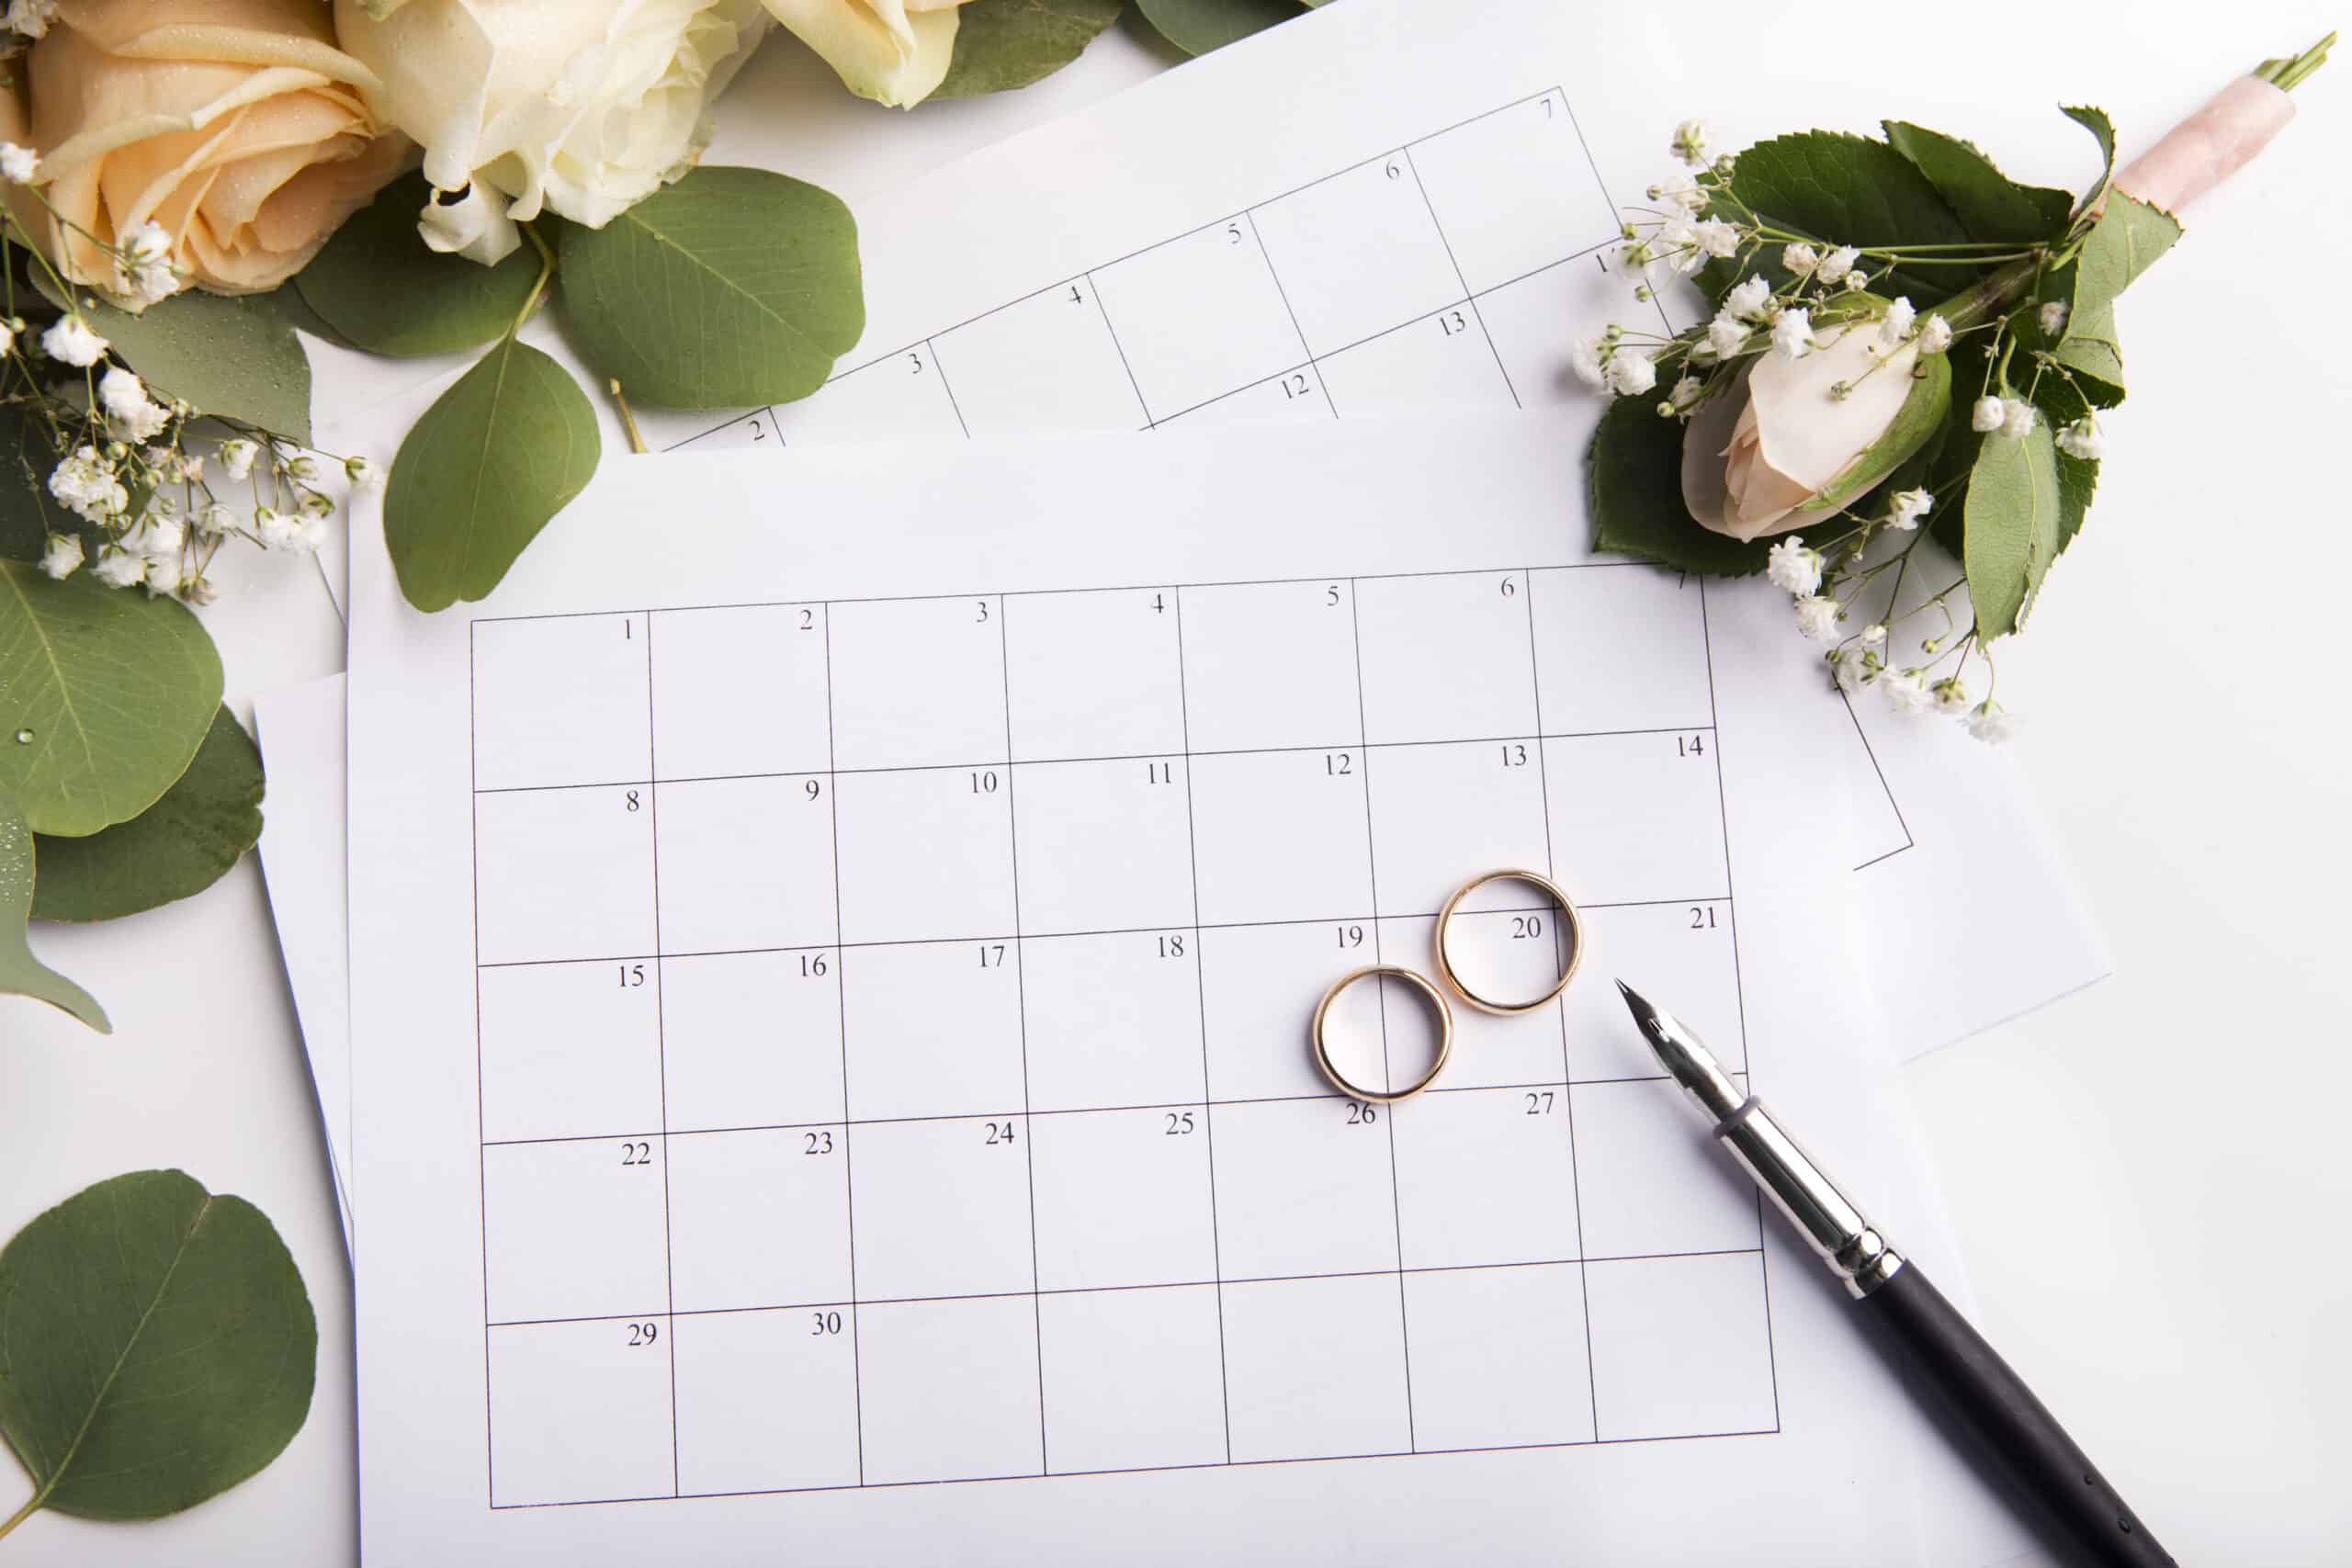 Wedding rings on a calendar